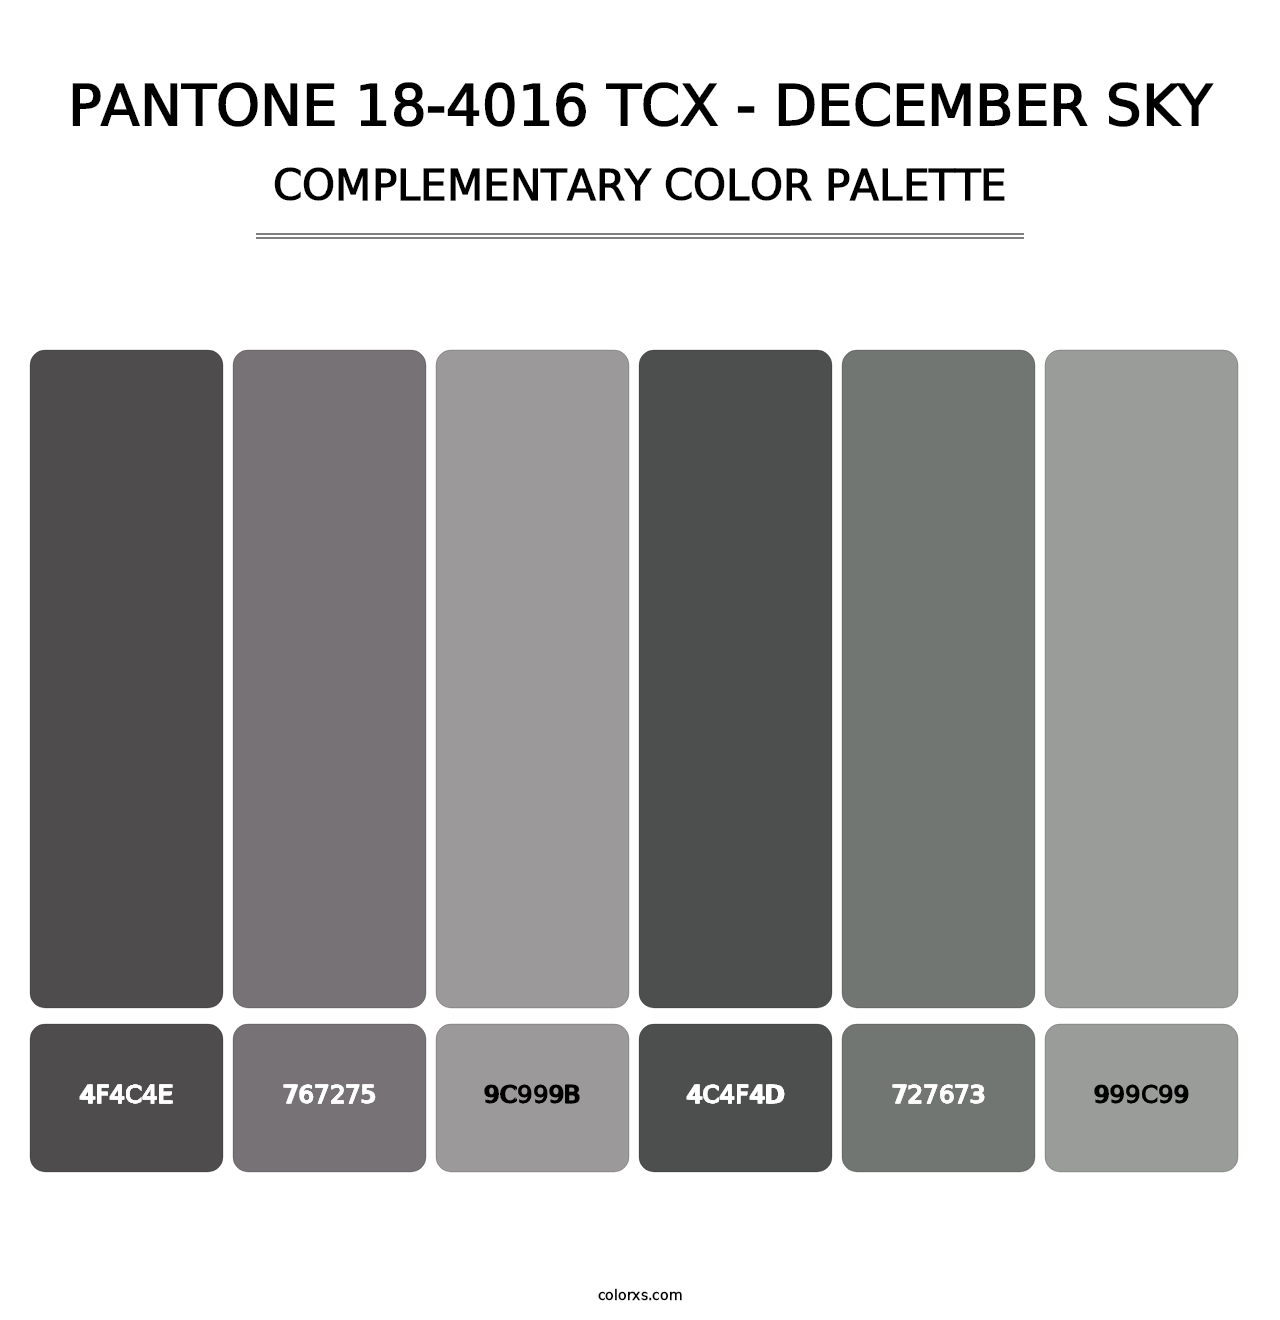 PANTONE 18-4016 TCX - December Sky - Complementary Color Palette